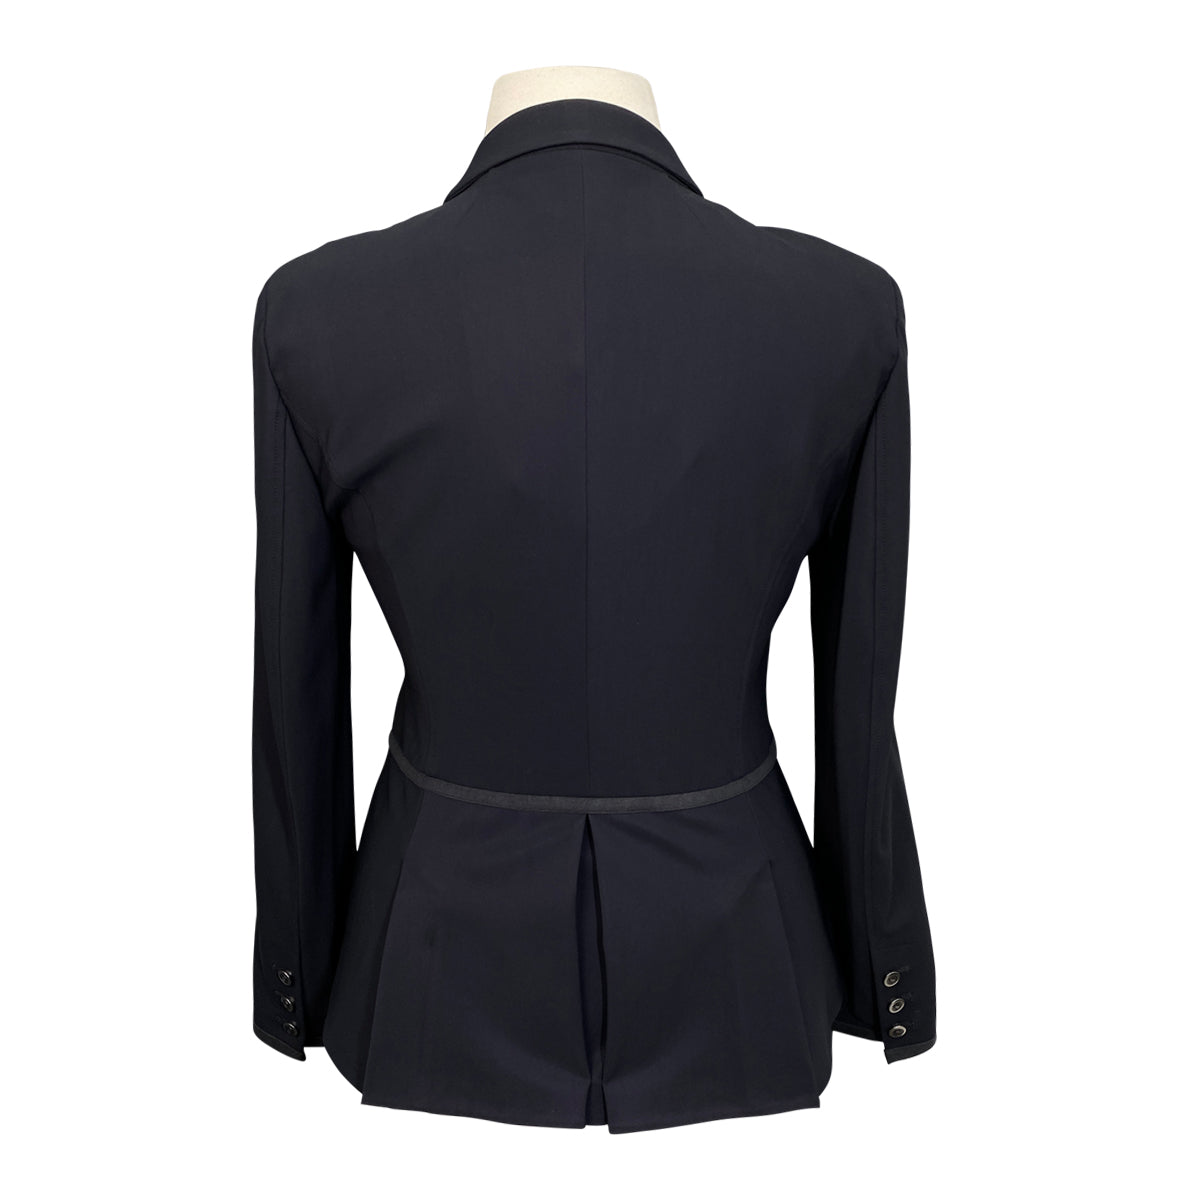 Samshield 'Victorine' Competition Jacket in Black